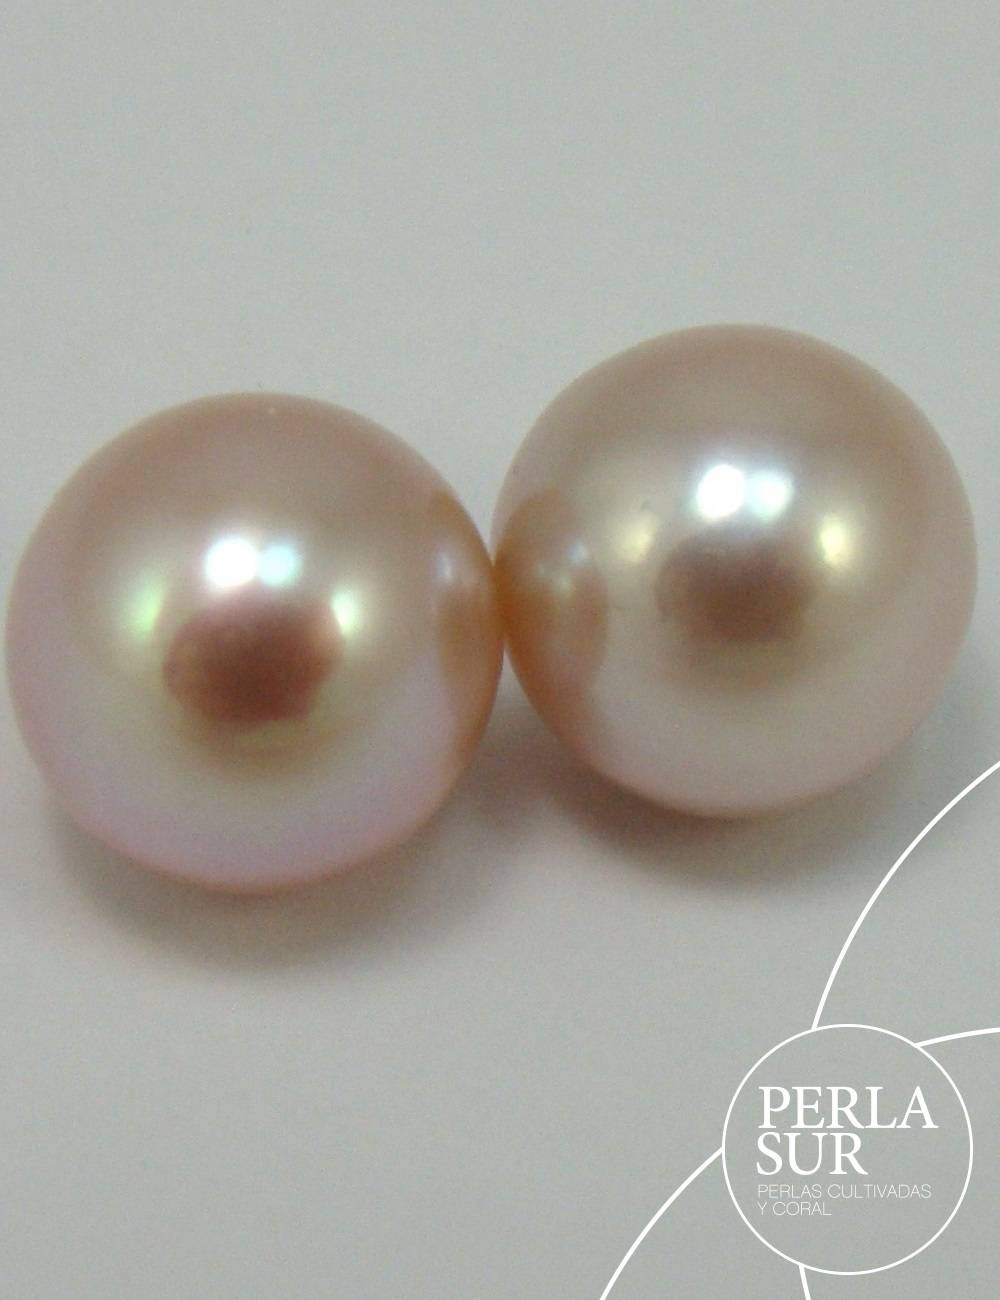 Perla esférica 5-5.5mm color natural